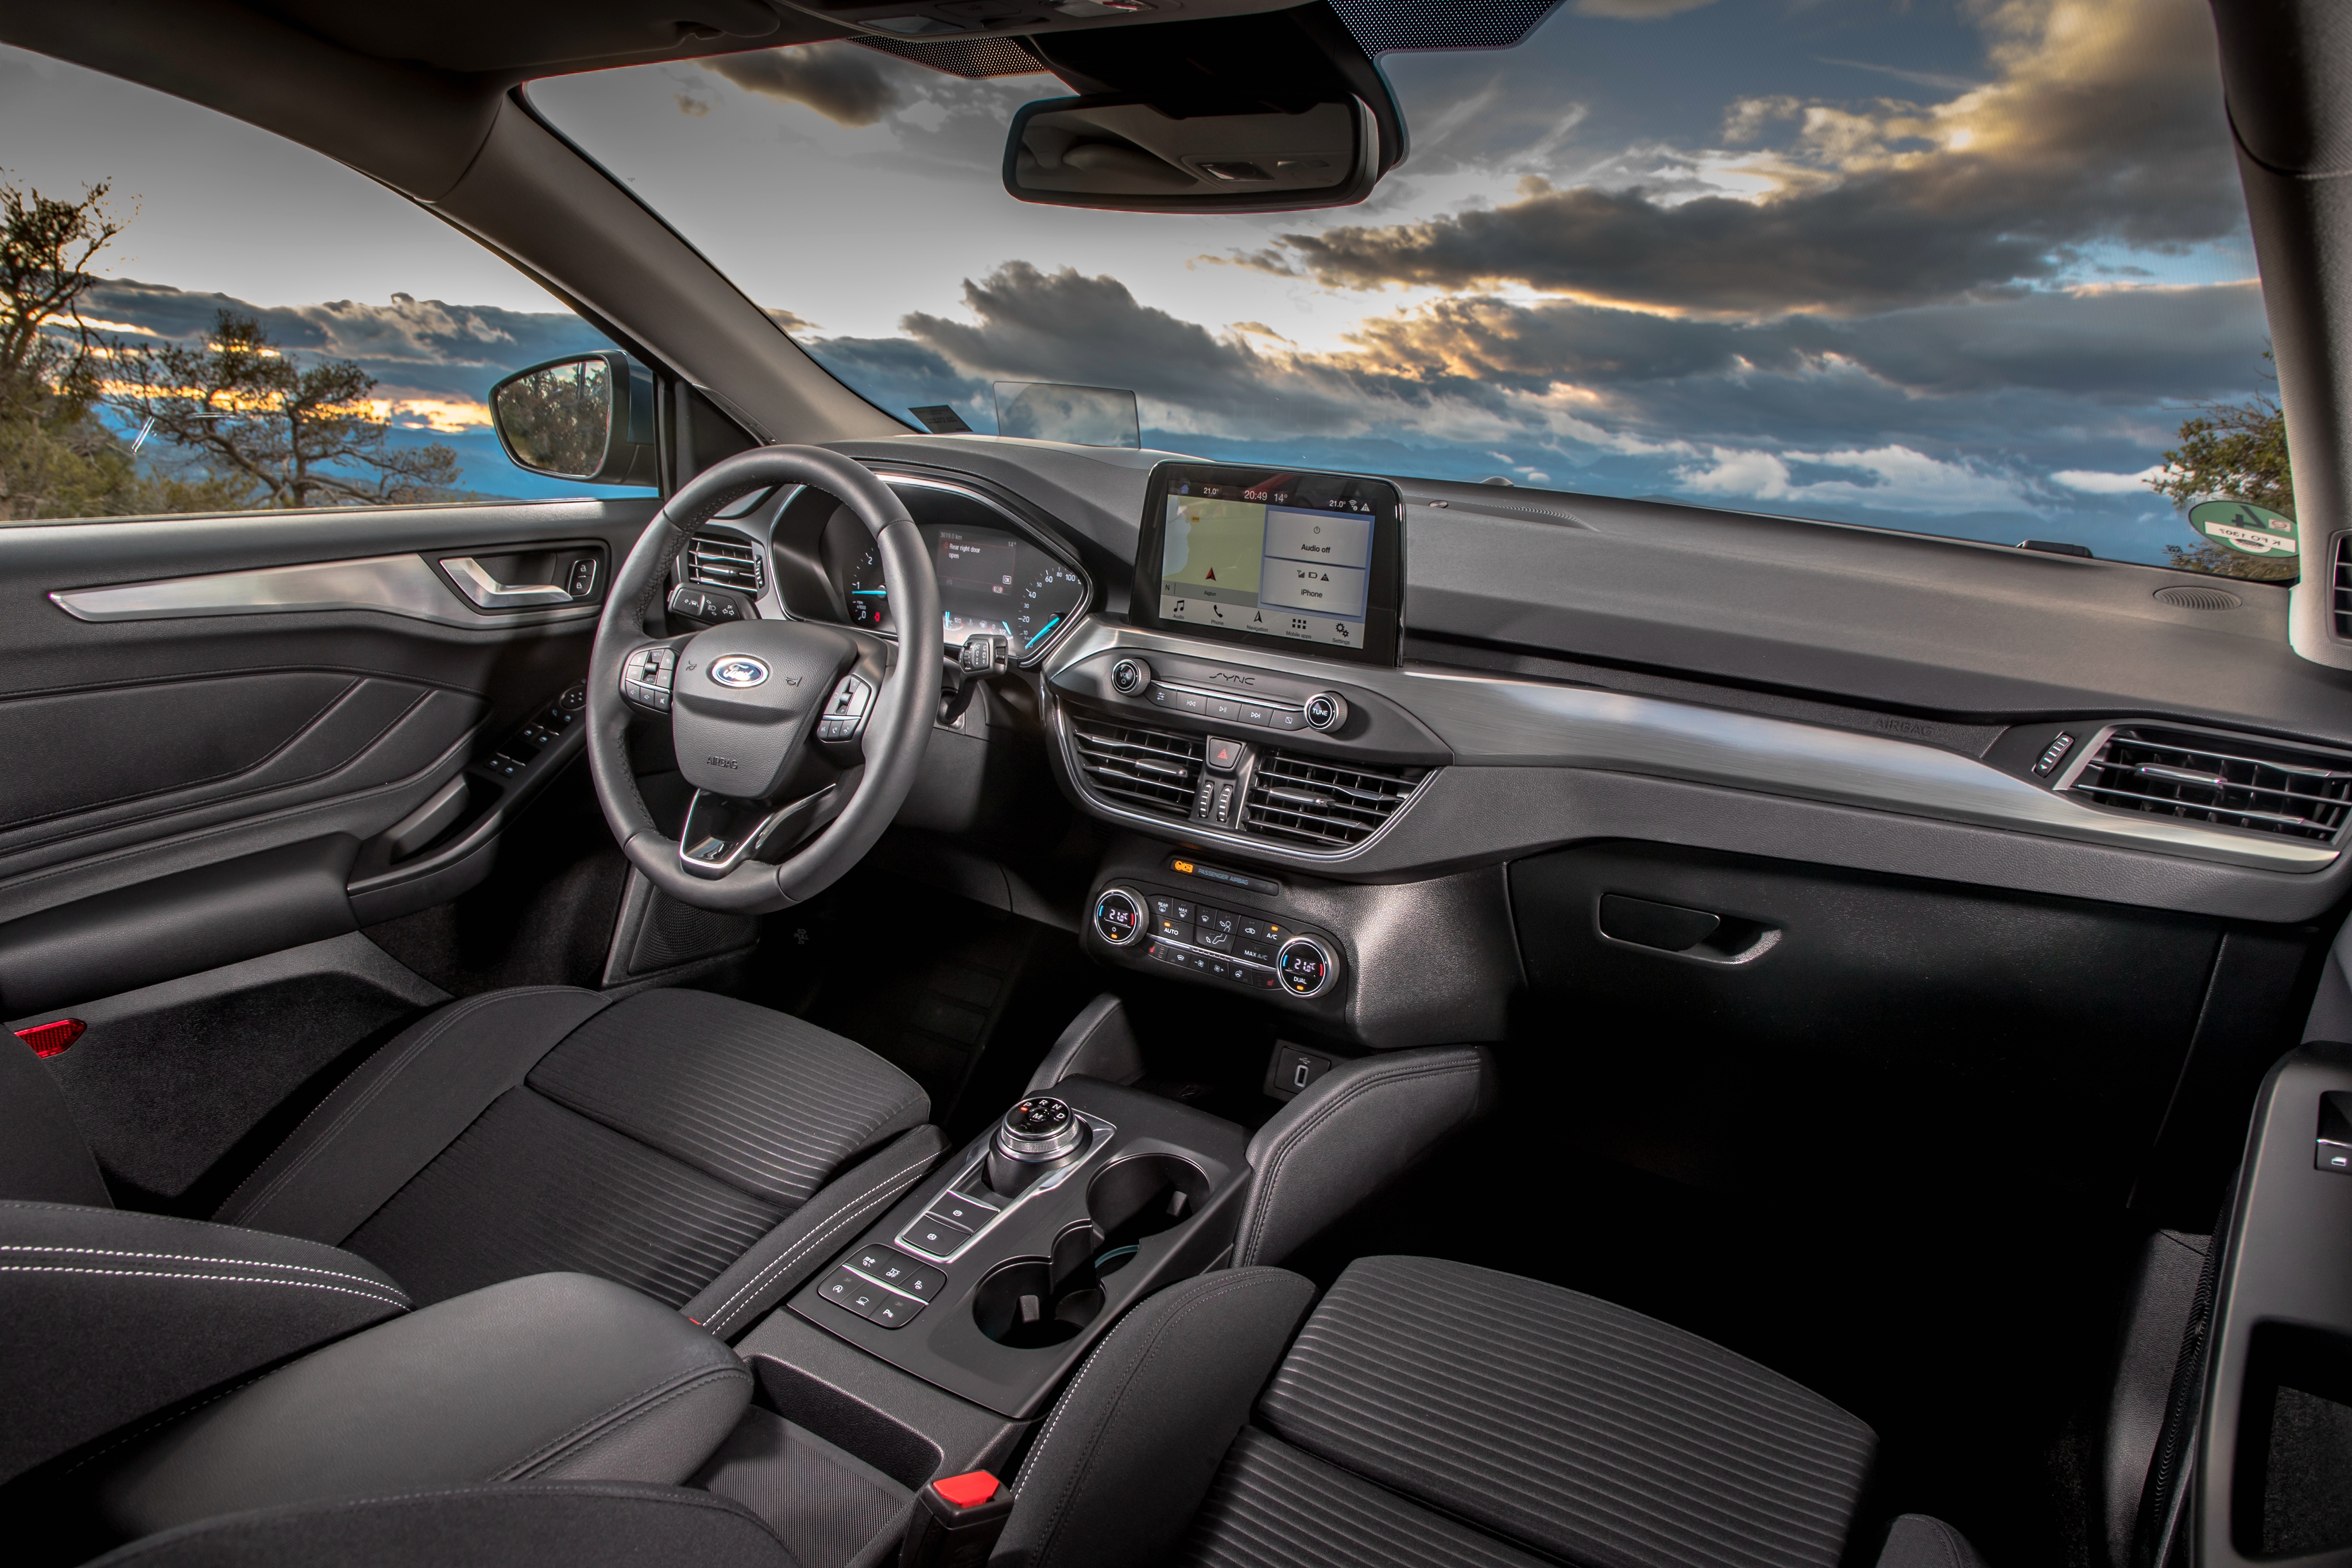 Ford Mondeo Liftback interior restyling